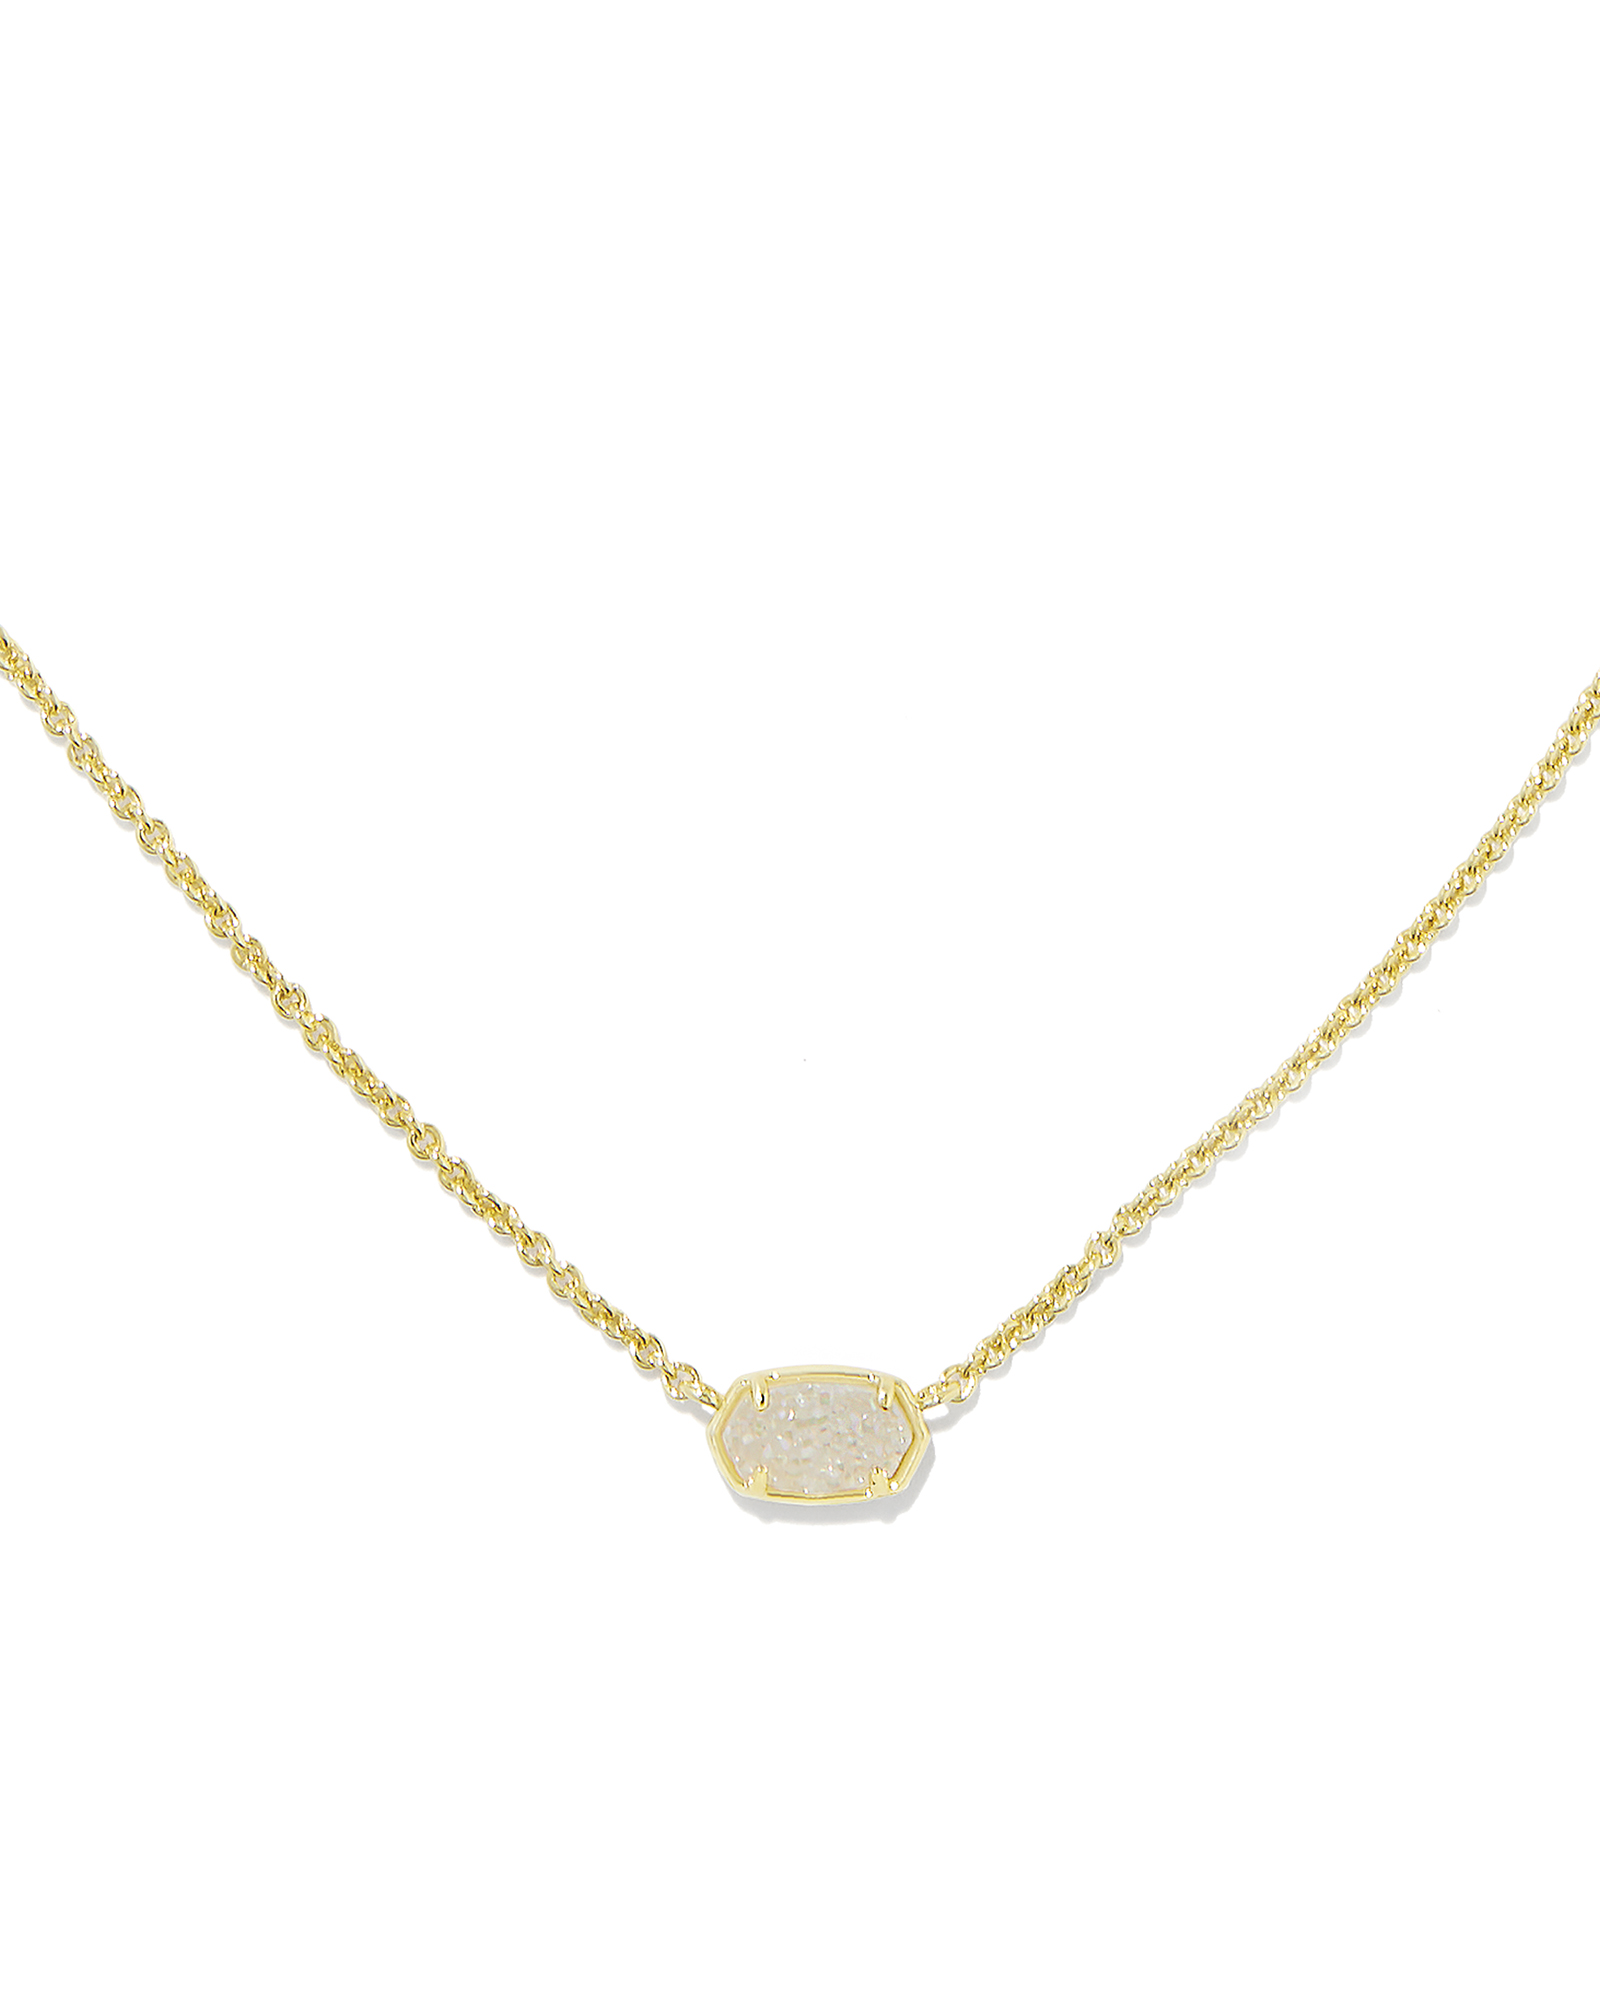 Kendra Scott Mom 14k Yellow Gold Pendant Necklace in White Diamonds | The  Summit at Fritz Farm